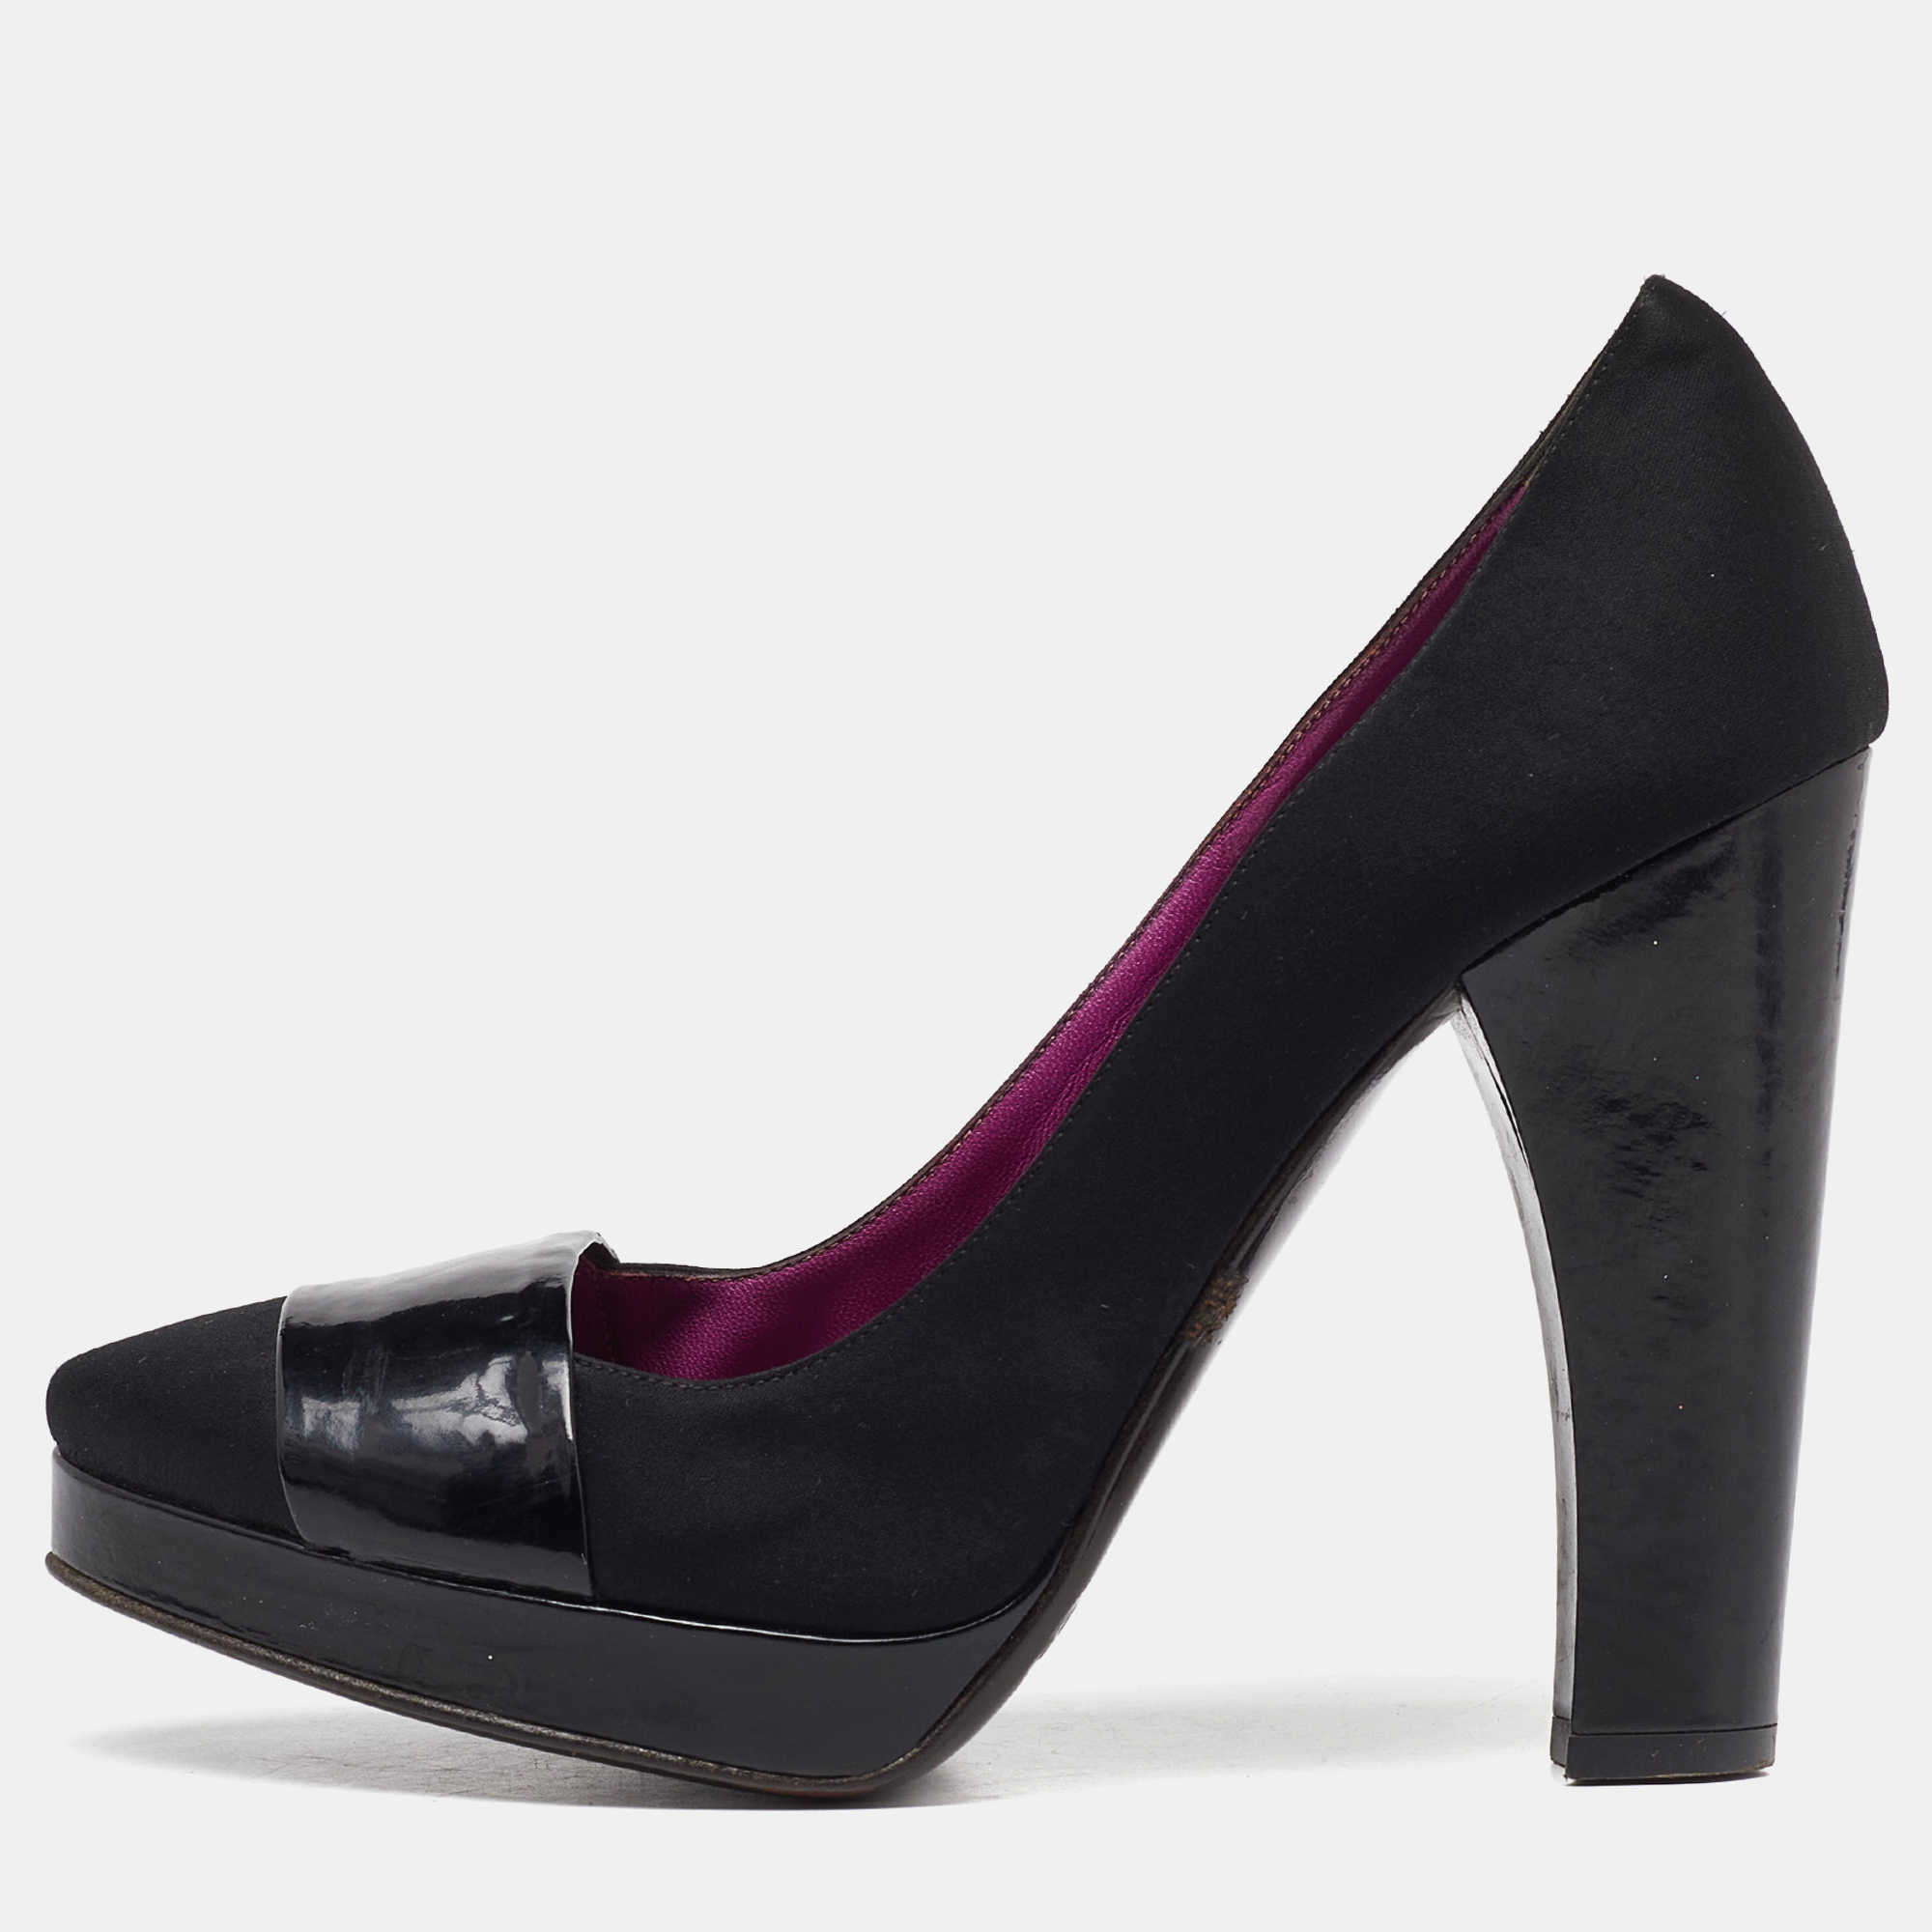 D&g black satin and patent leather platform block heel pumps size 39